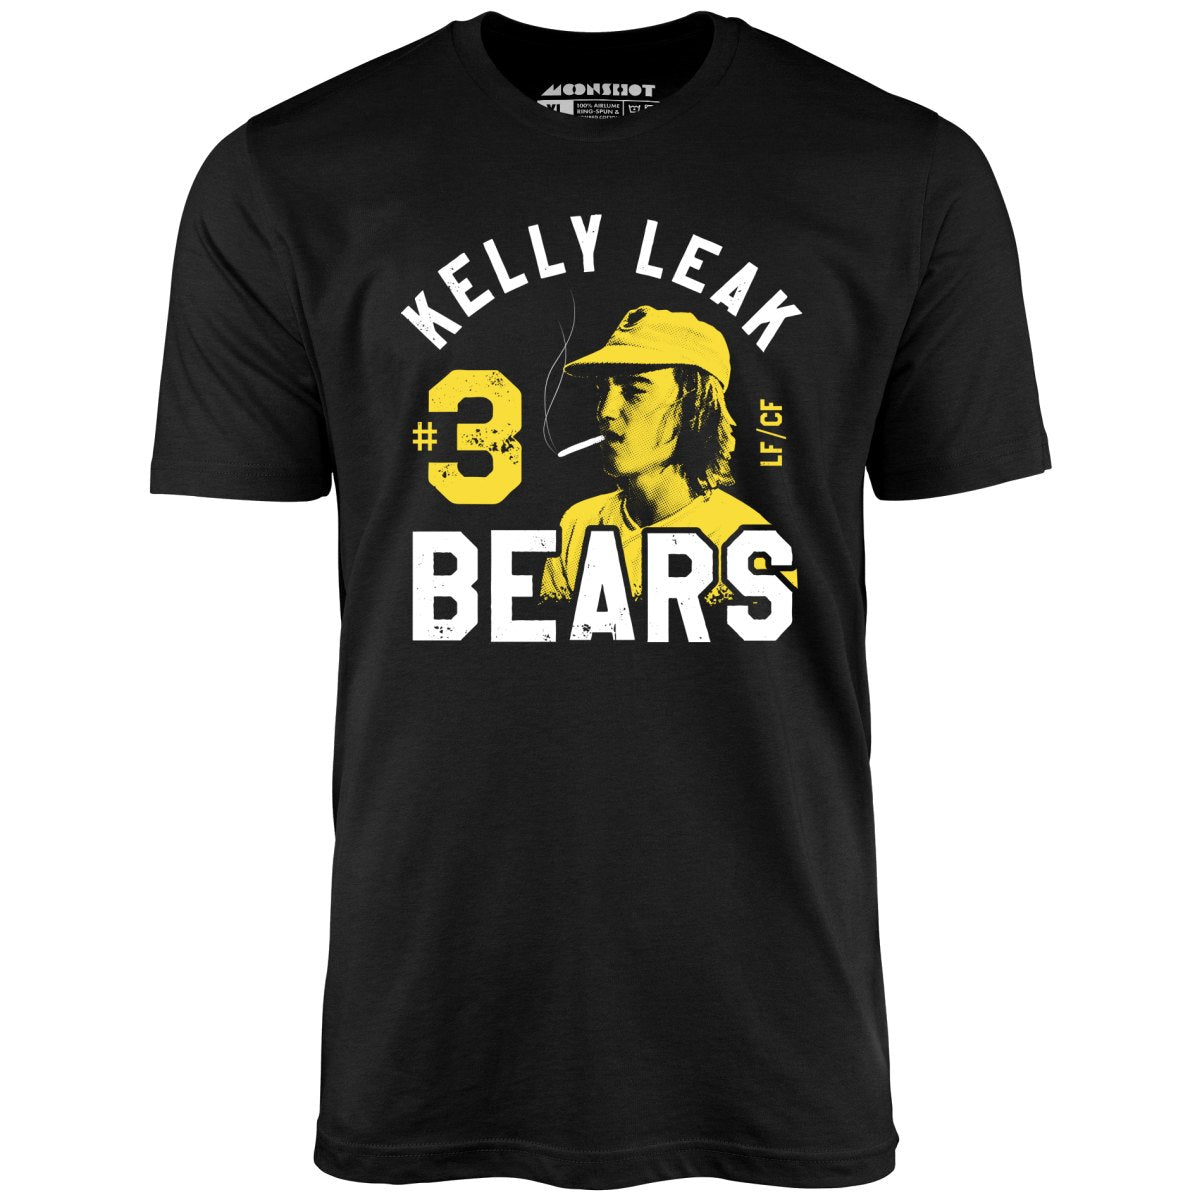 Kelly Leak #3 Bears - Unisex T-Shirt